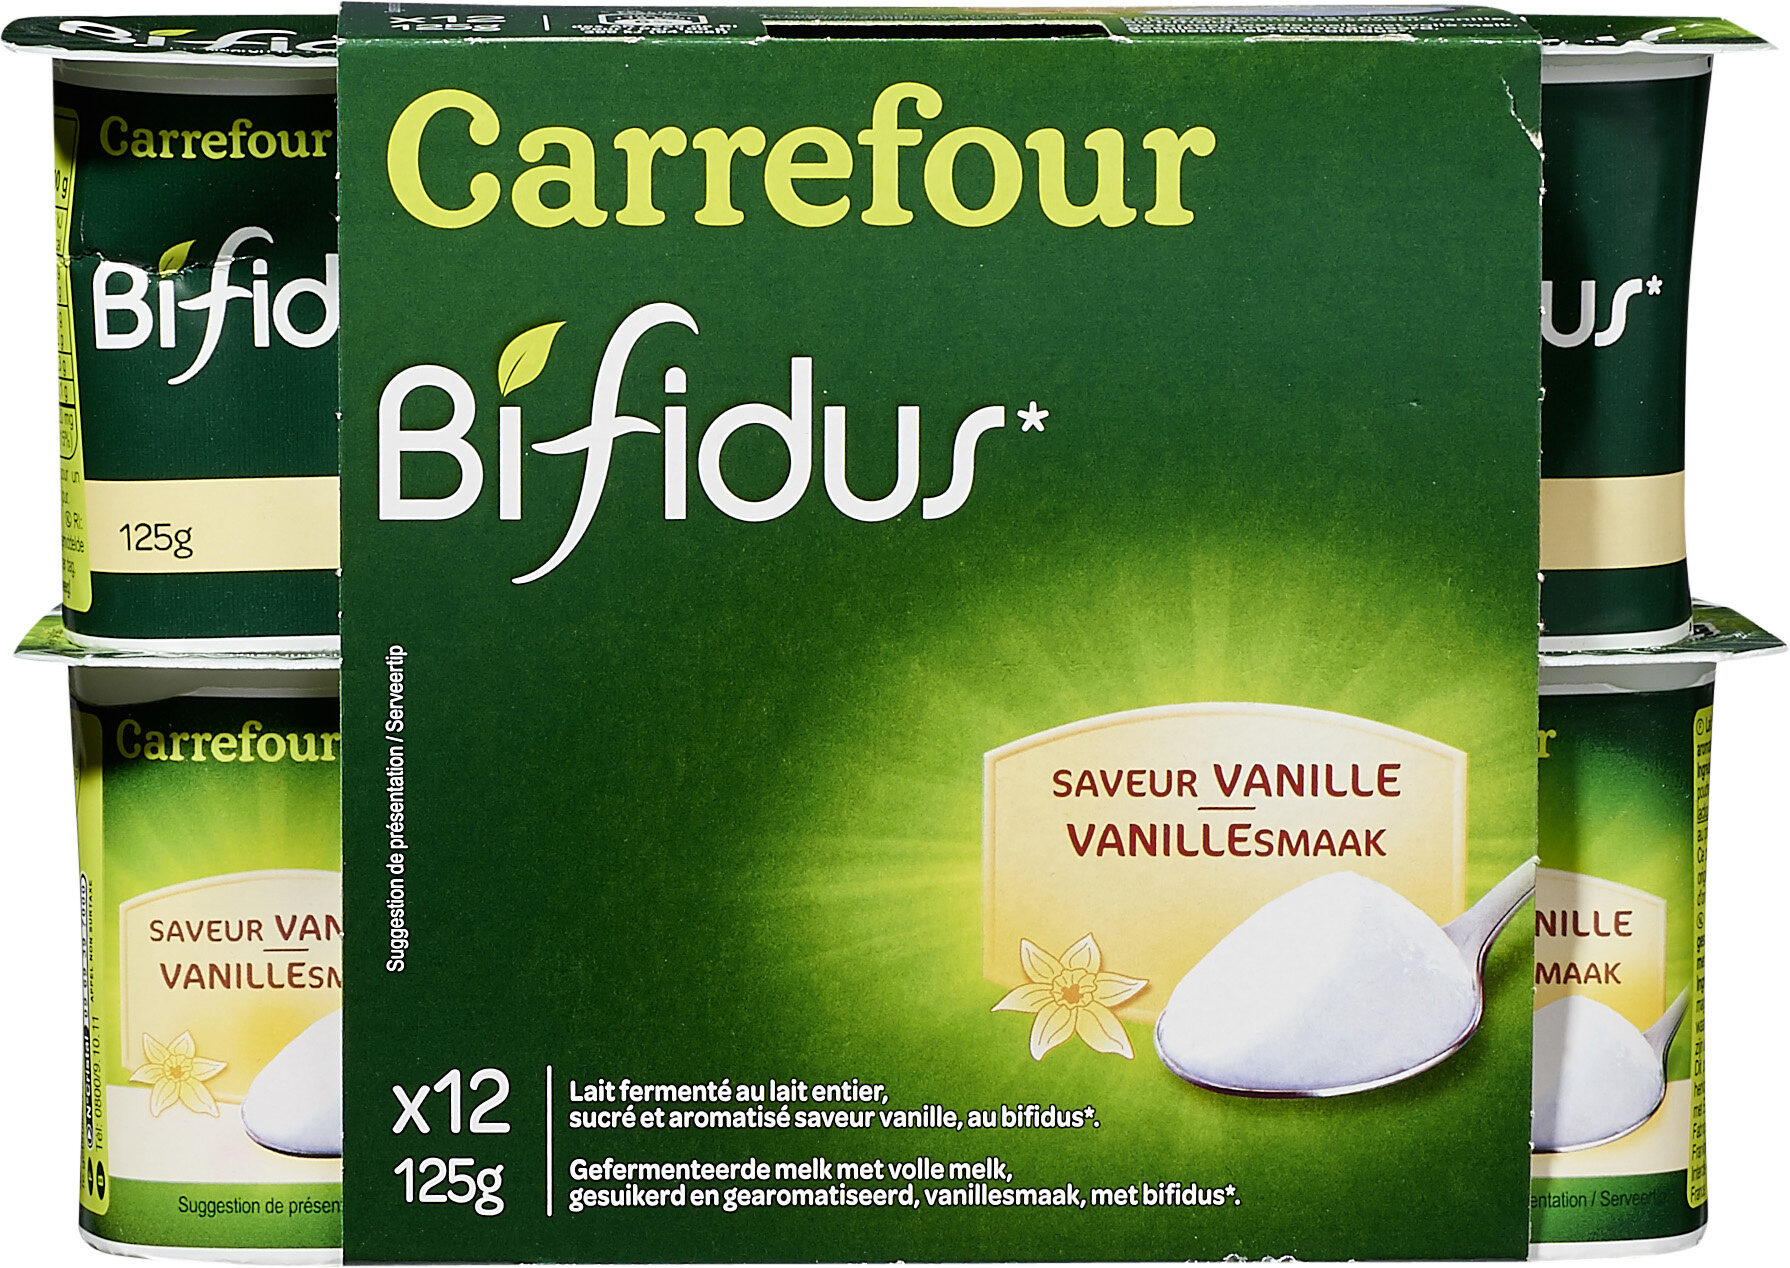 Bifidus* saveur vanille - Produkt - fr